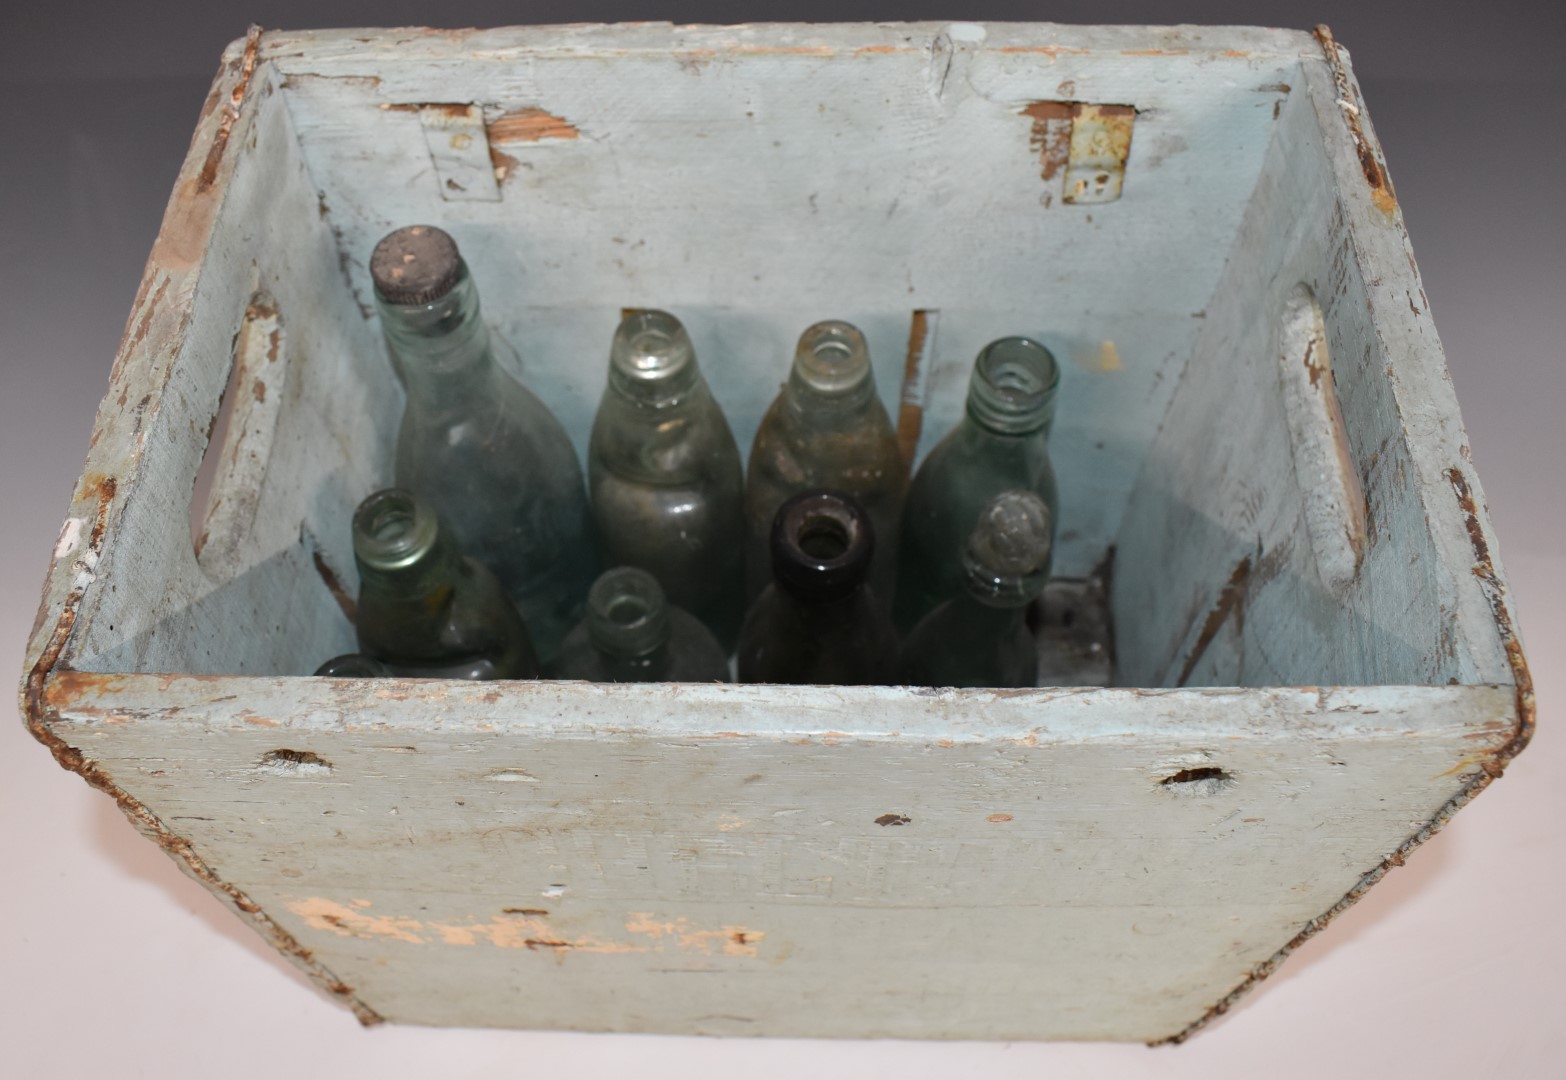 Vintage Cheltenham Original Brewery Co wooden crate with 11 vintage bottles including Cheltenham, - Image 2 of 2